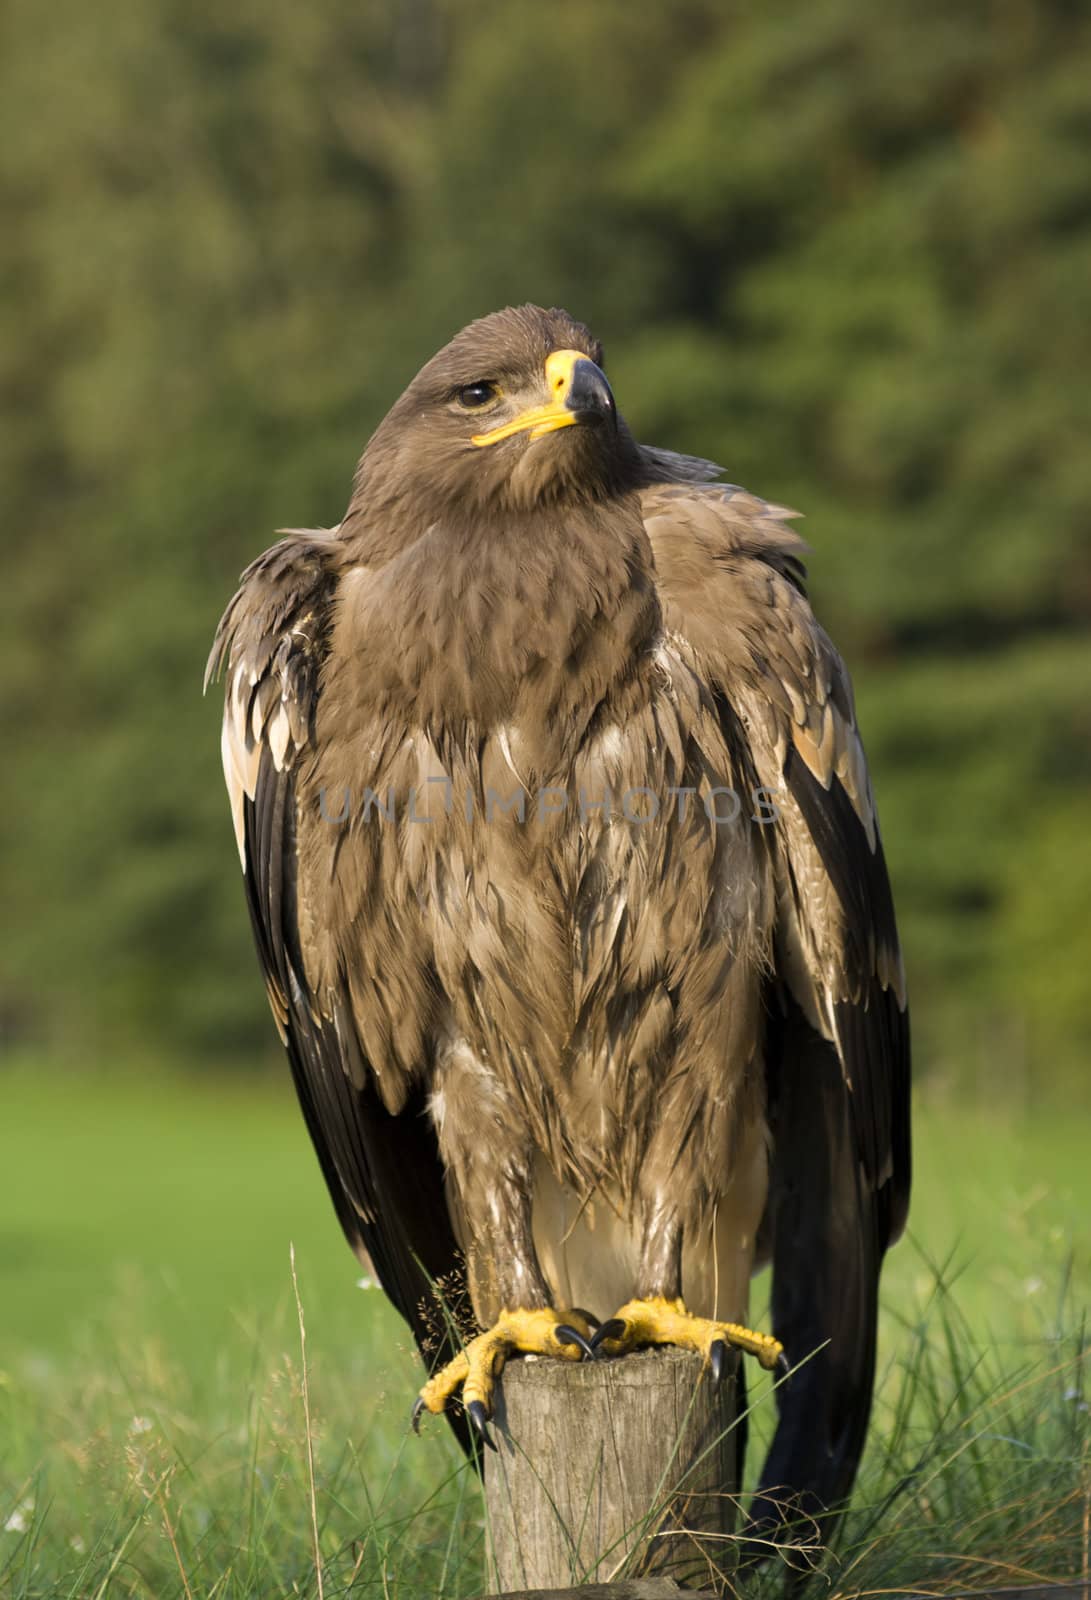 Bird of prey - eagle (family Accipitridae).